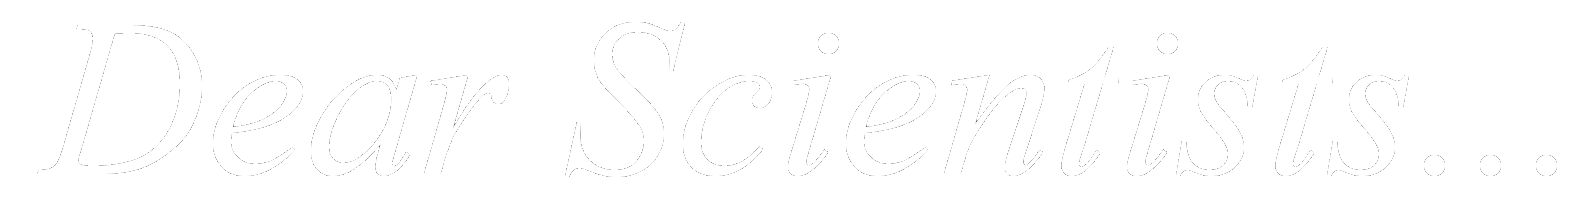 Dear Scientists logo